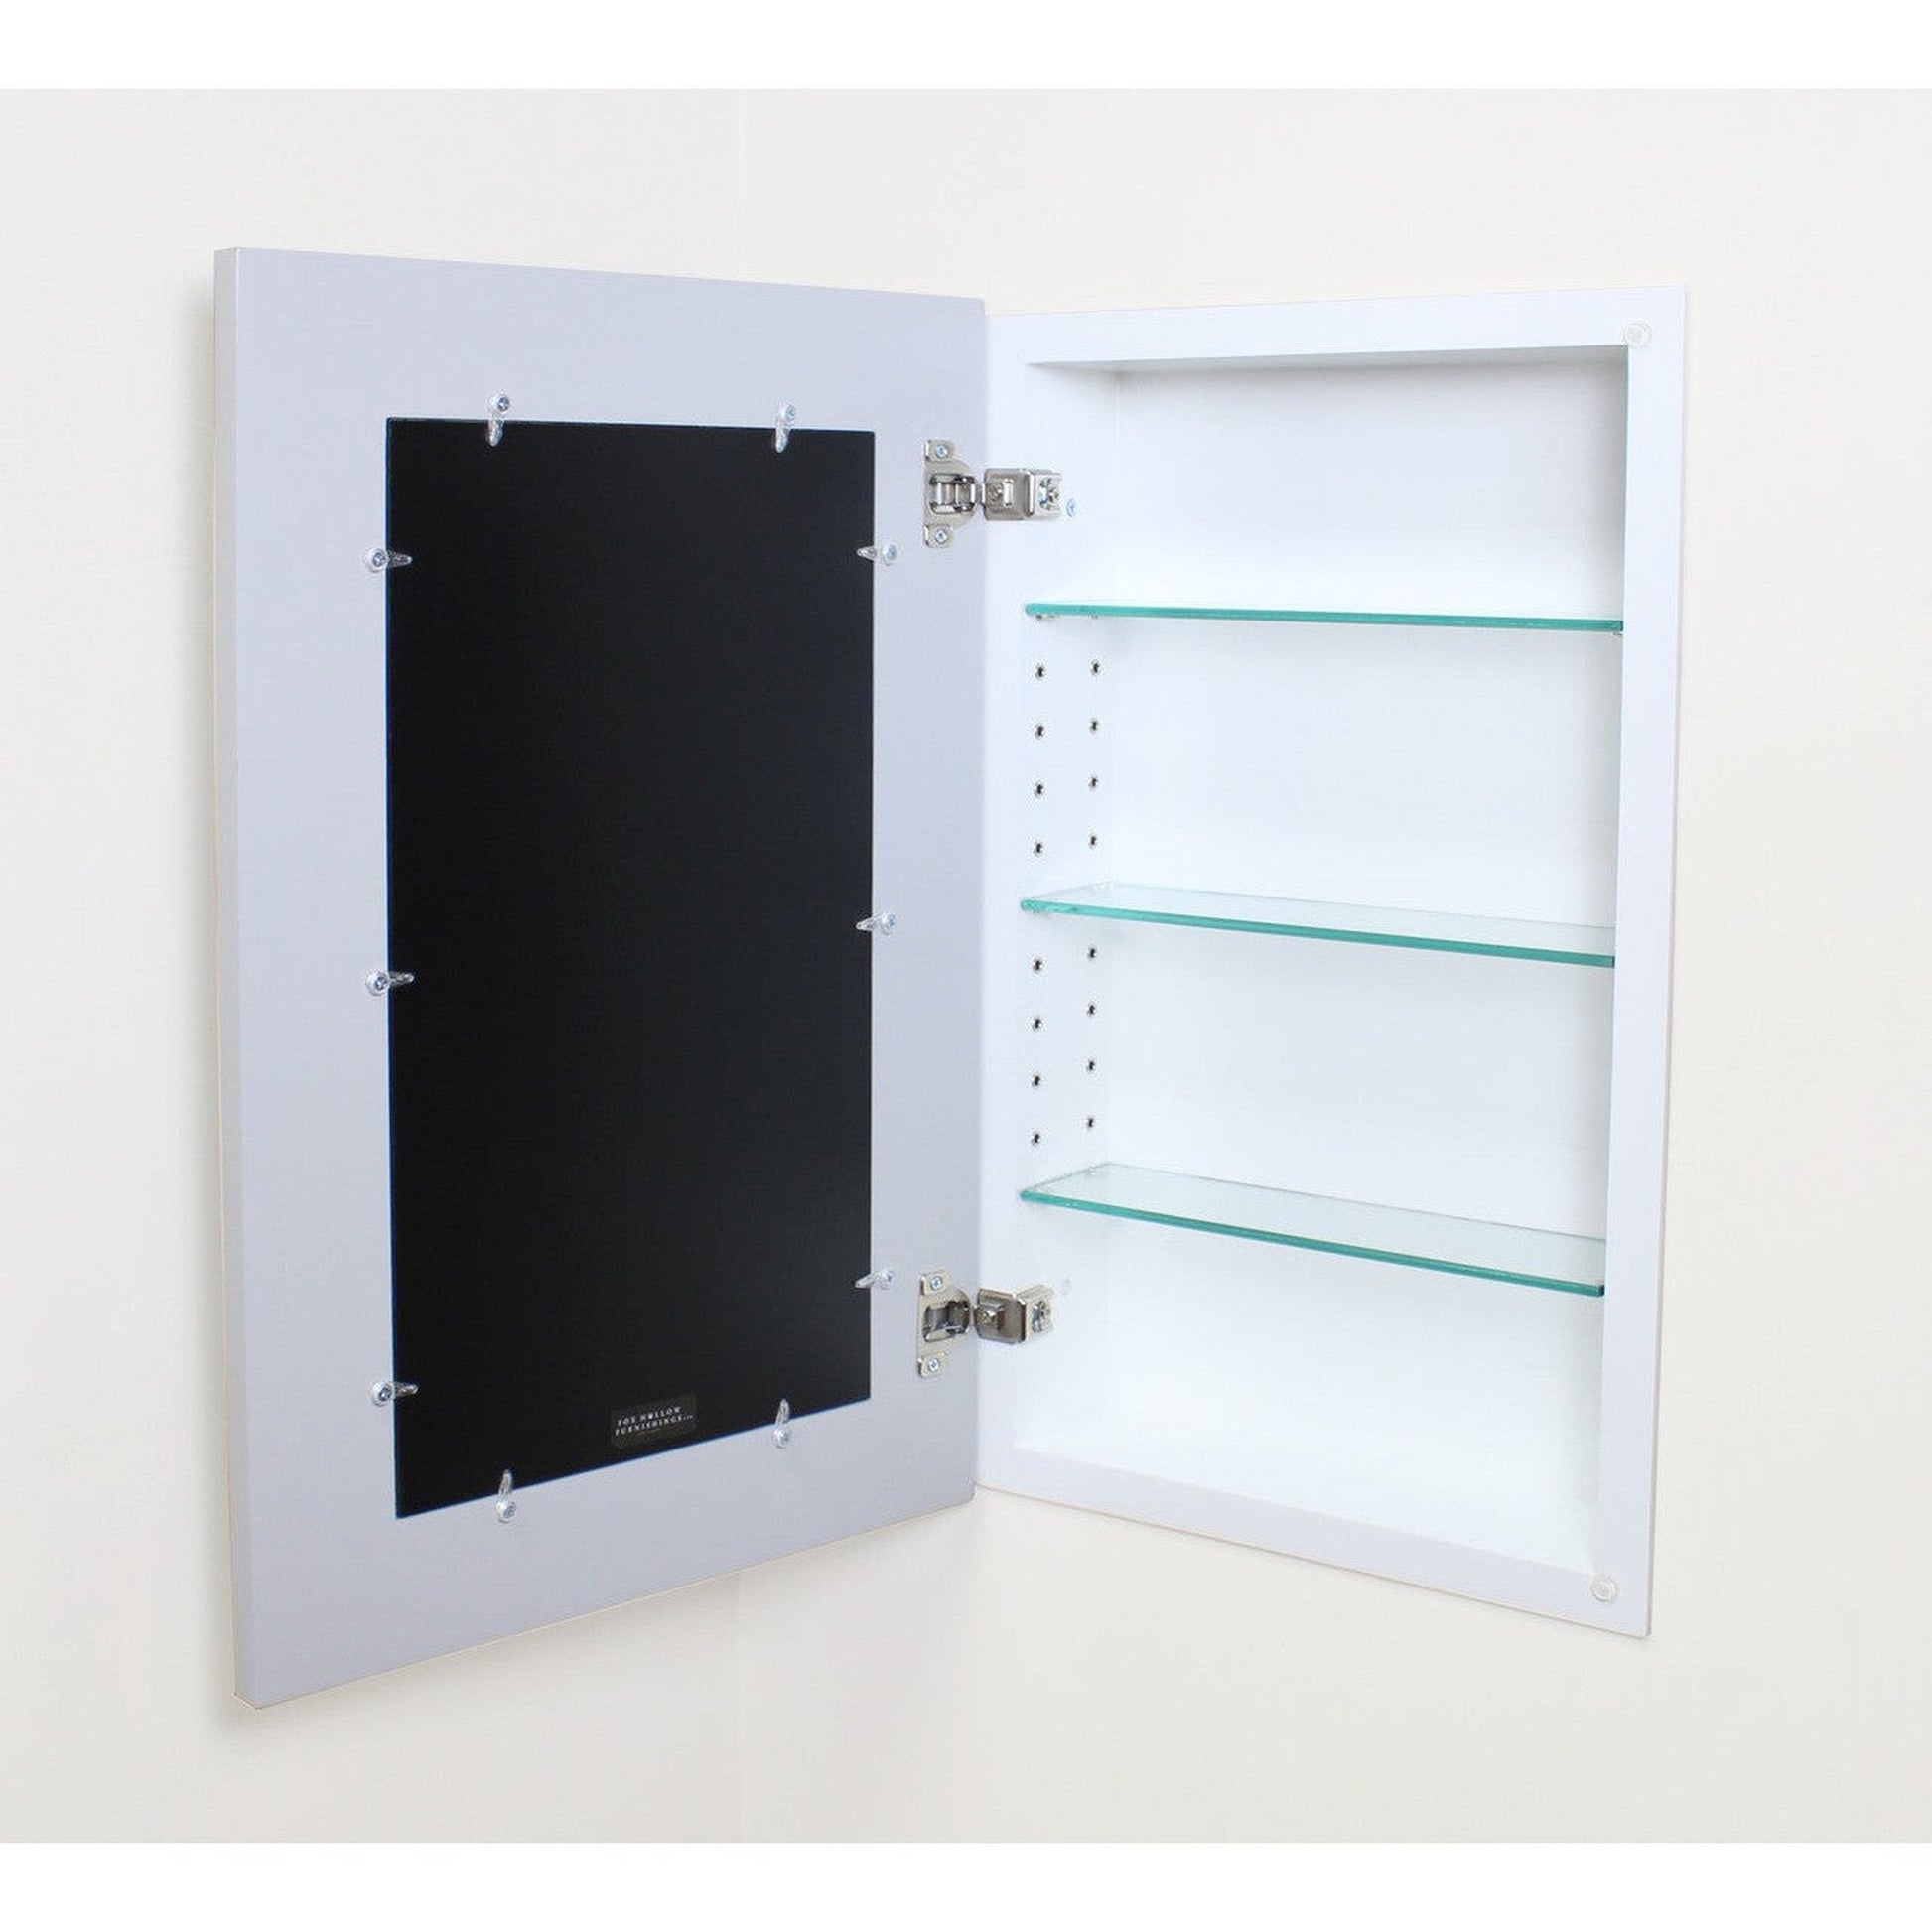 Fox Hollow Furnishings 14" x 24" Light Gray Standard 4" Depth White Interior Mirrored Medicine Cabinet